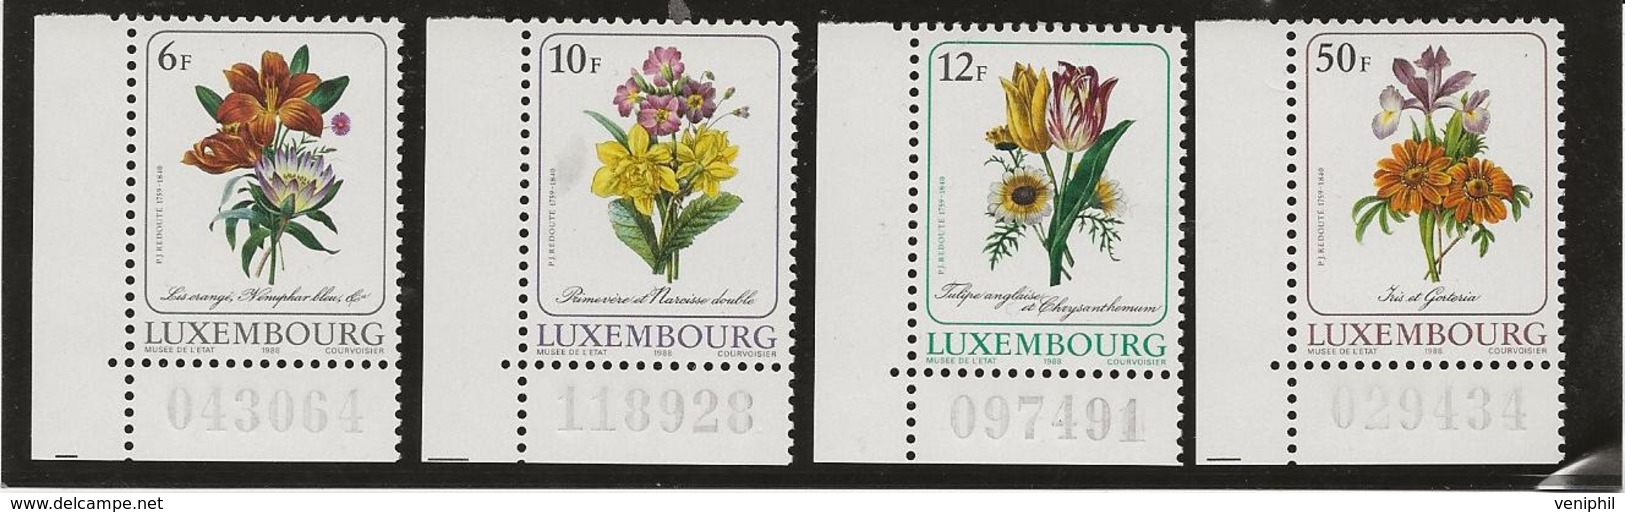 LUXEMBOURG - SERIE FLEURS N° 1140 A 1143 -NEUVE SANS CHARNIERE -ANNEE 1988 - Nuevos